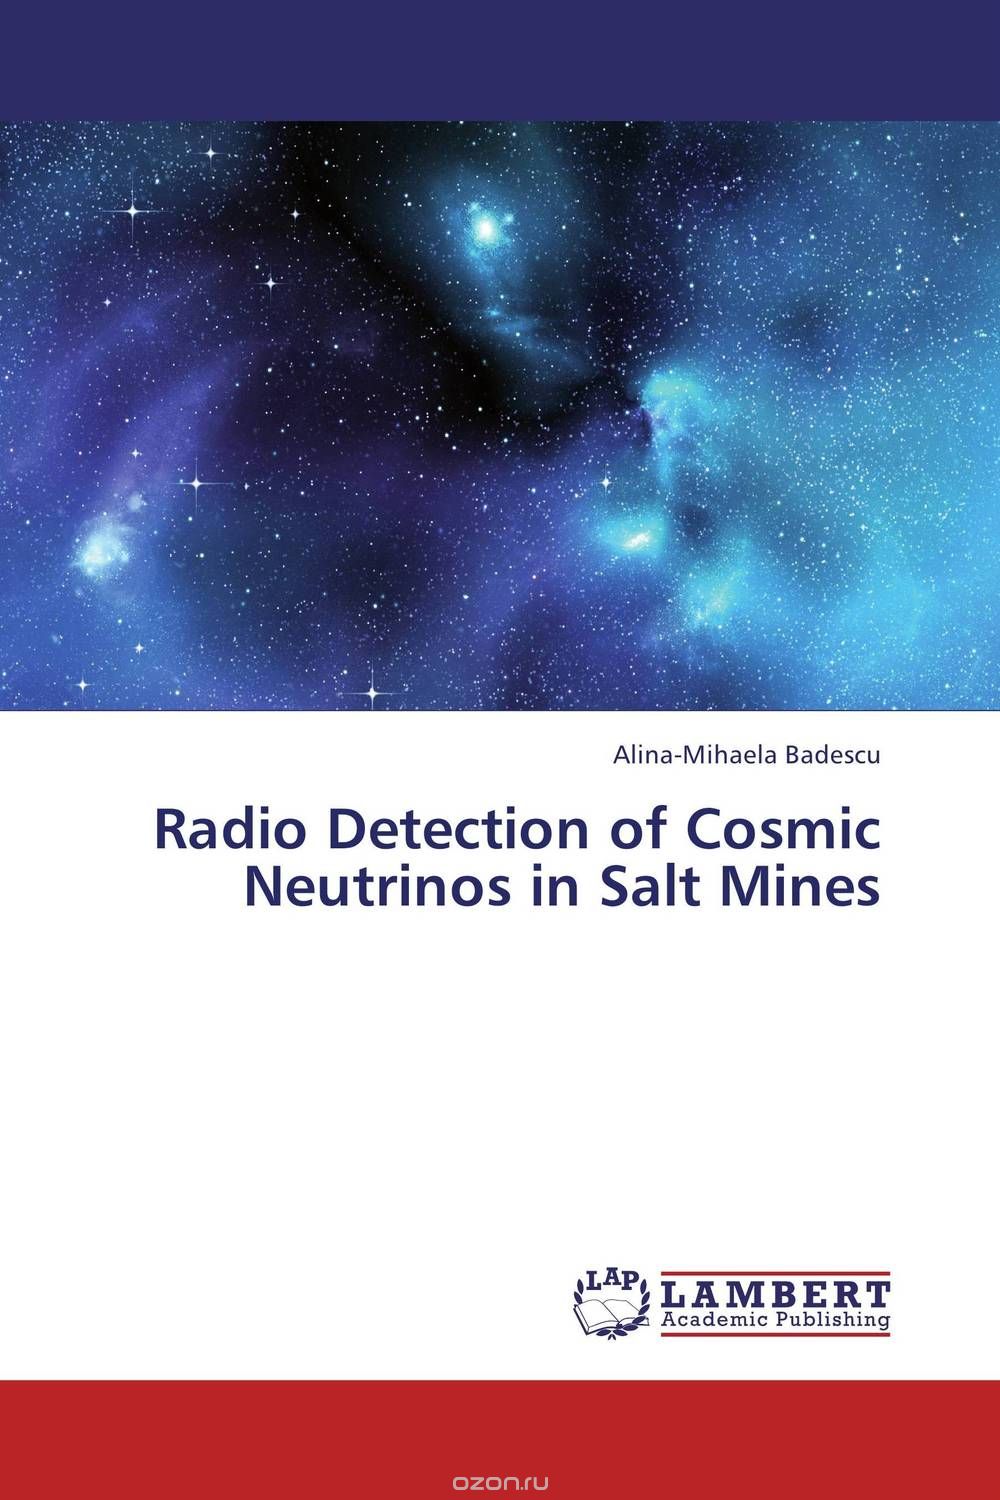 Radio Detection of Cosmic Neutrinos in Salt Mines